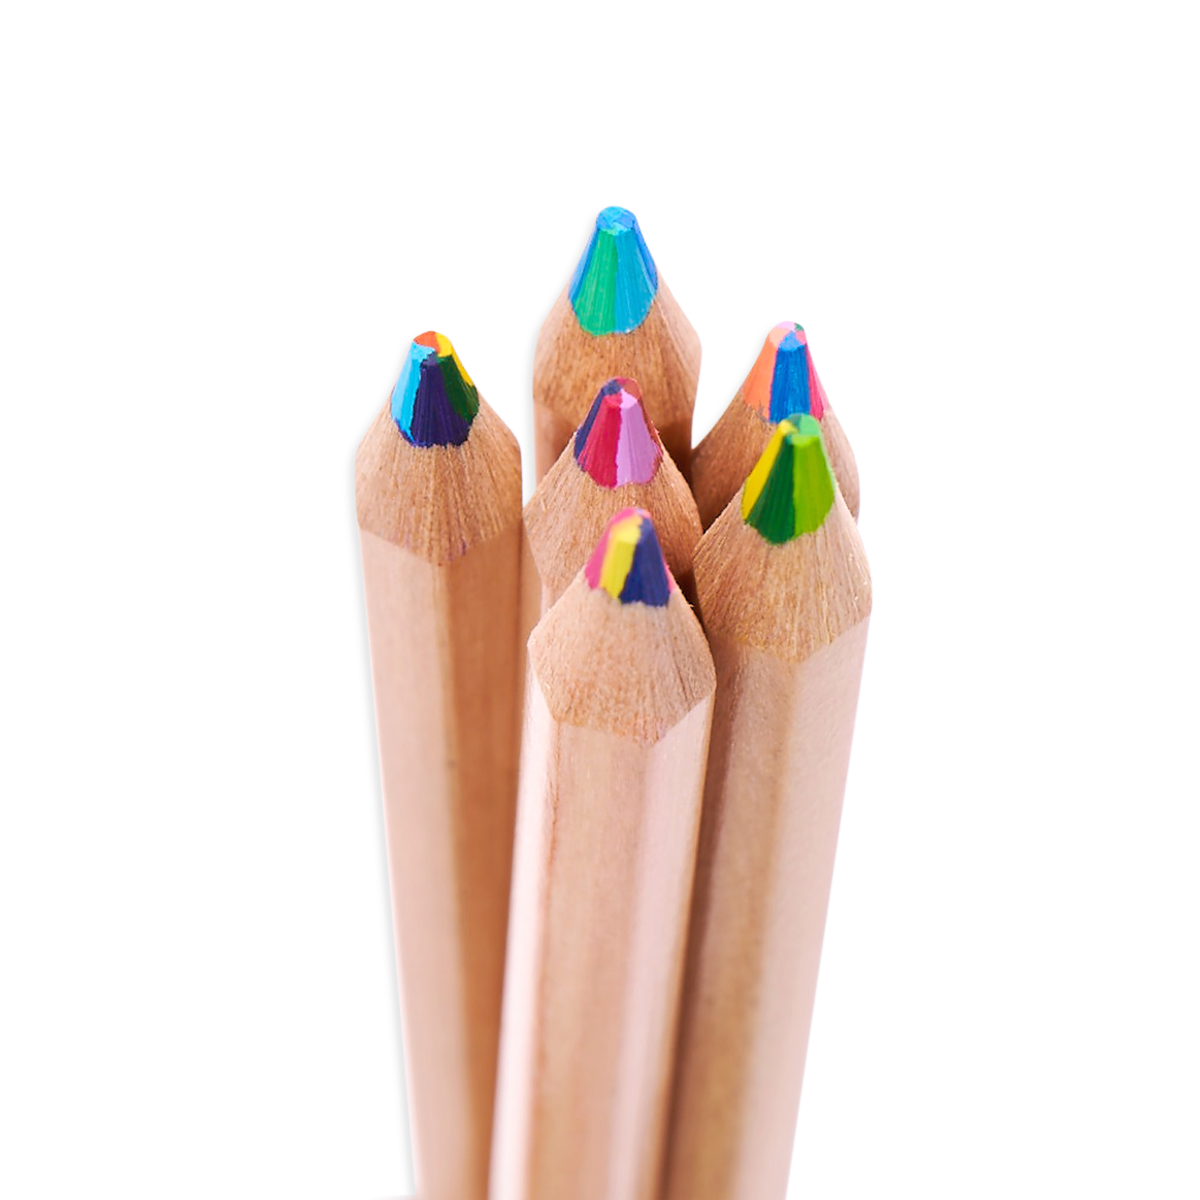 OOLY Kaleidoscope Multi-Colored Pencils close up